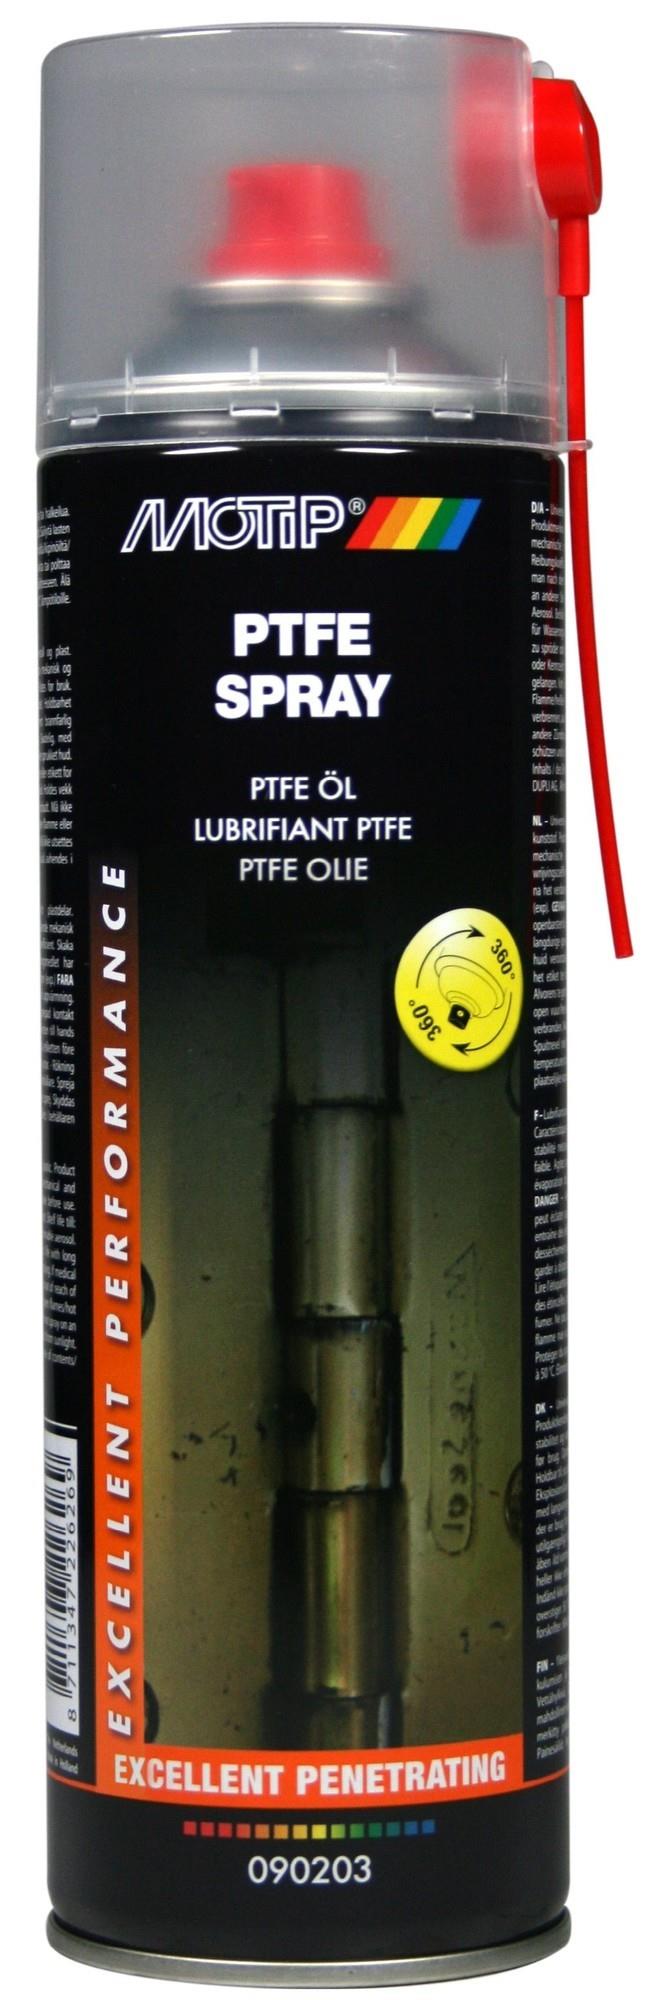 Lubrifiant teflon Motip spray 500ml_4300.jpg